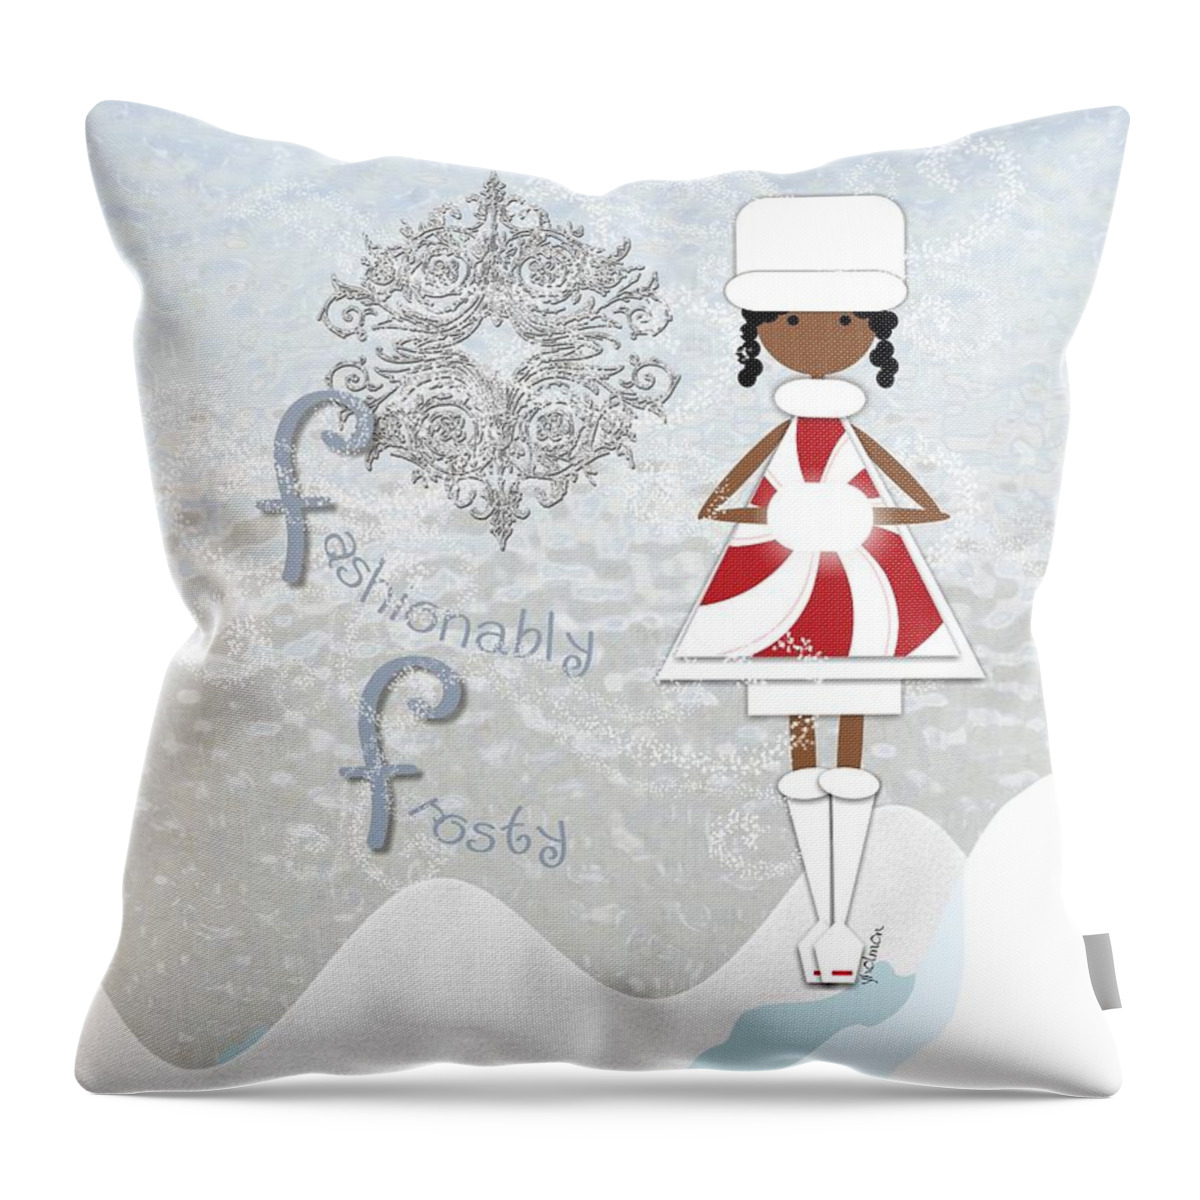 Frozen Throw Pillow featuring the digital art Patti by Yoli Fae